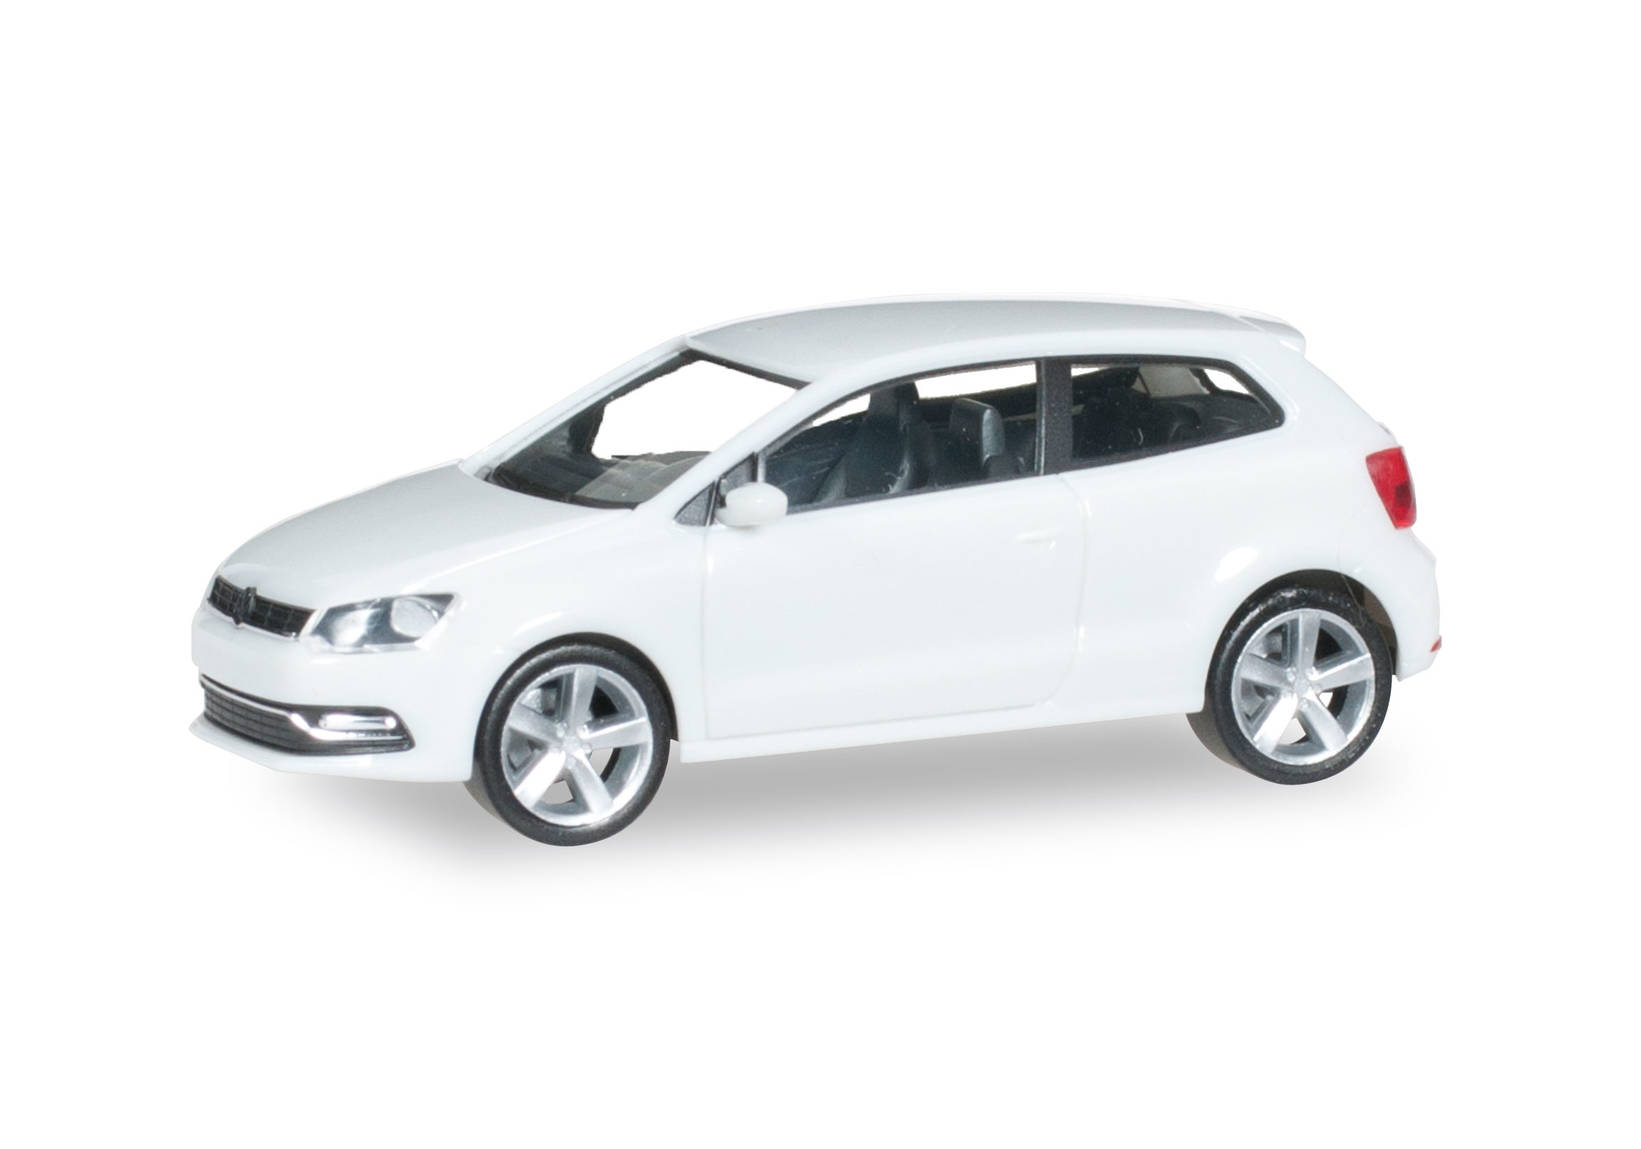 VW Polo 3 doors facelift, pure white